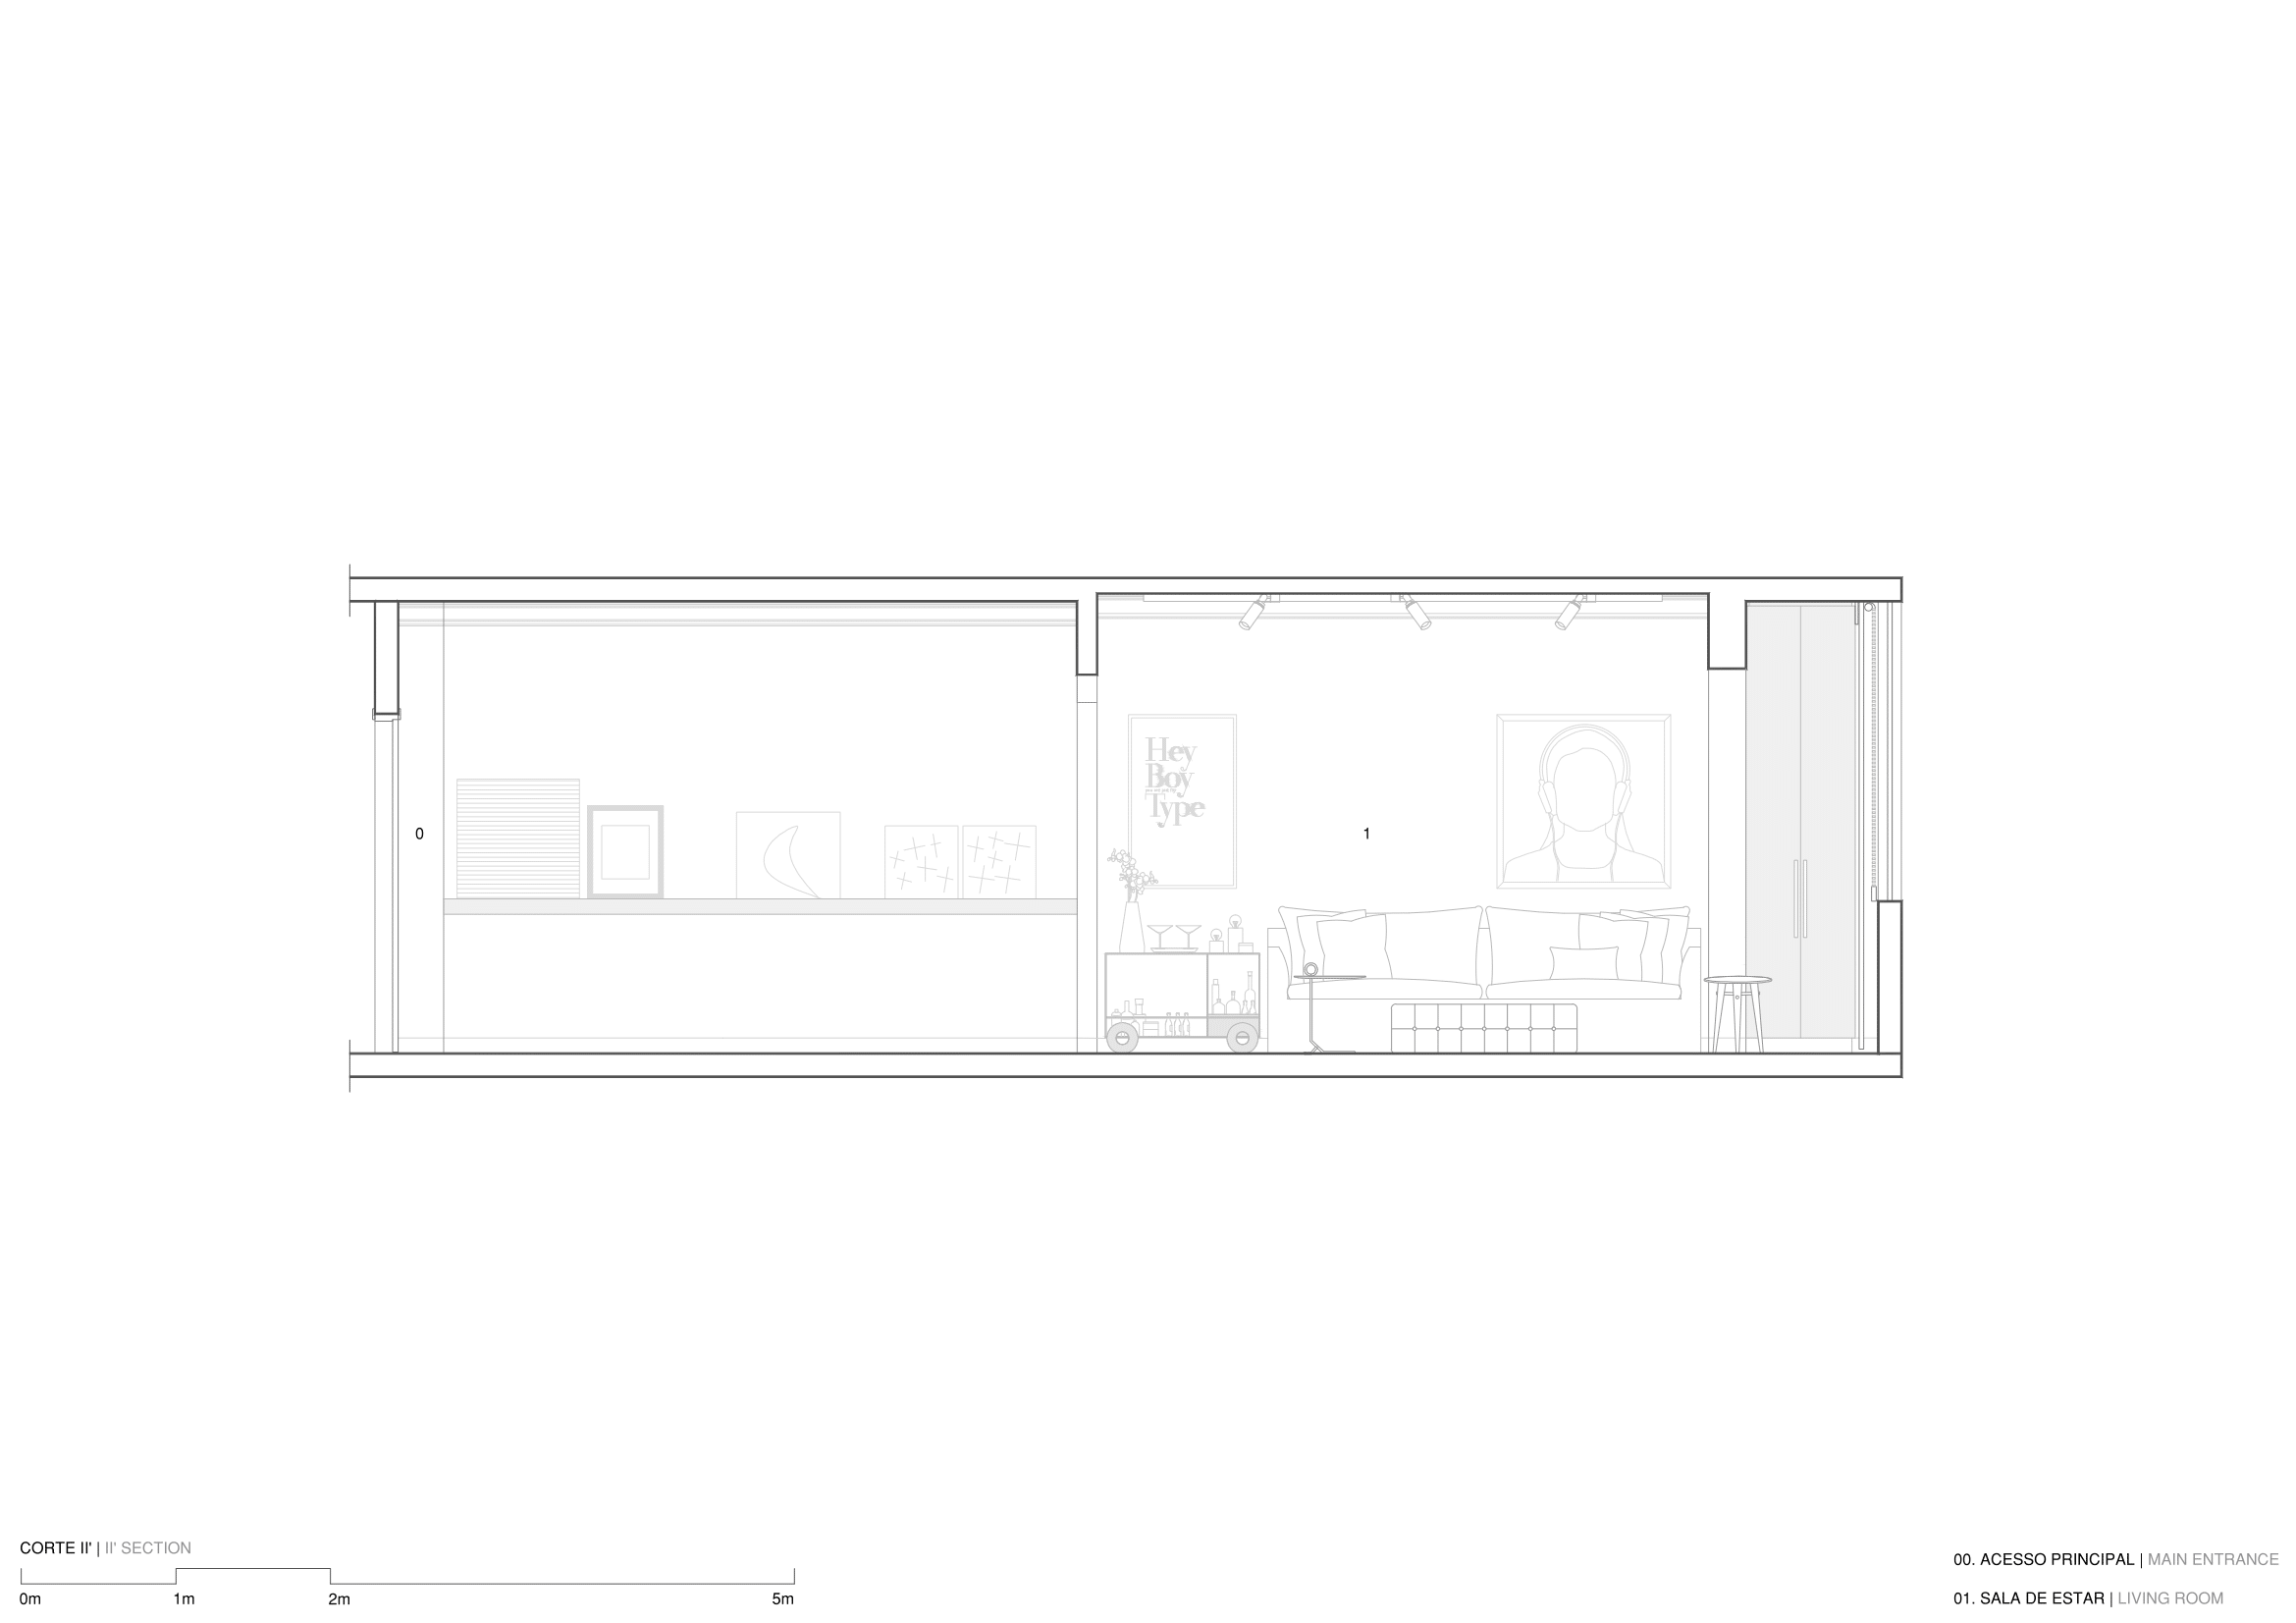 hobjecto-arquitetura-apartamento-bs-ap-10-corteii